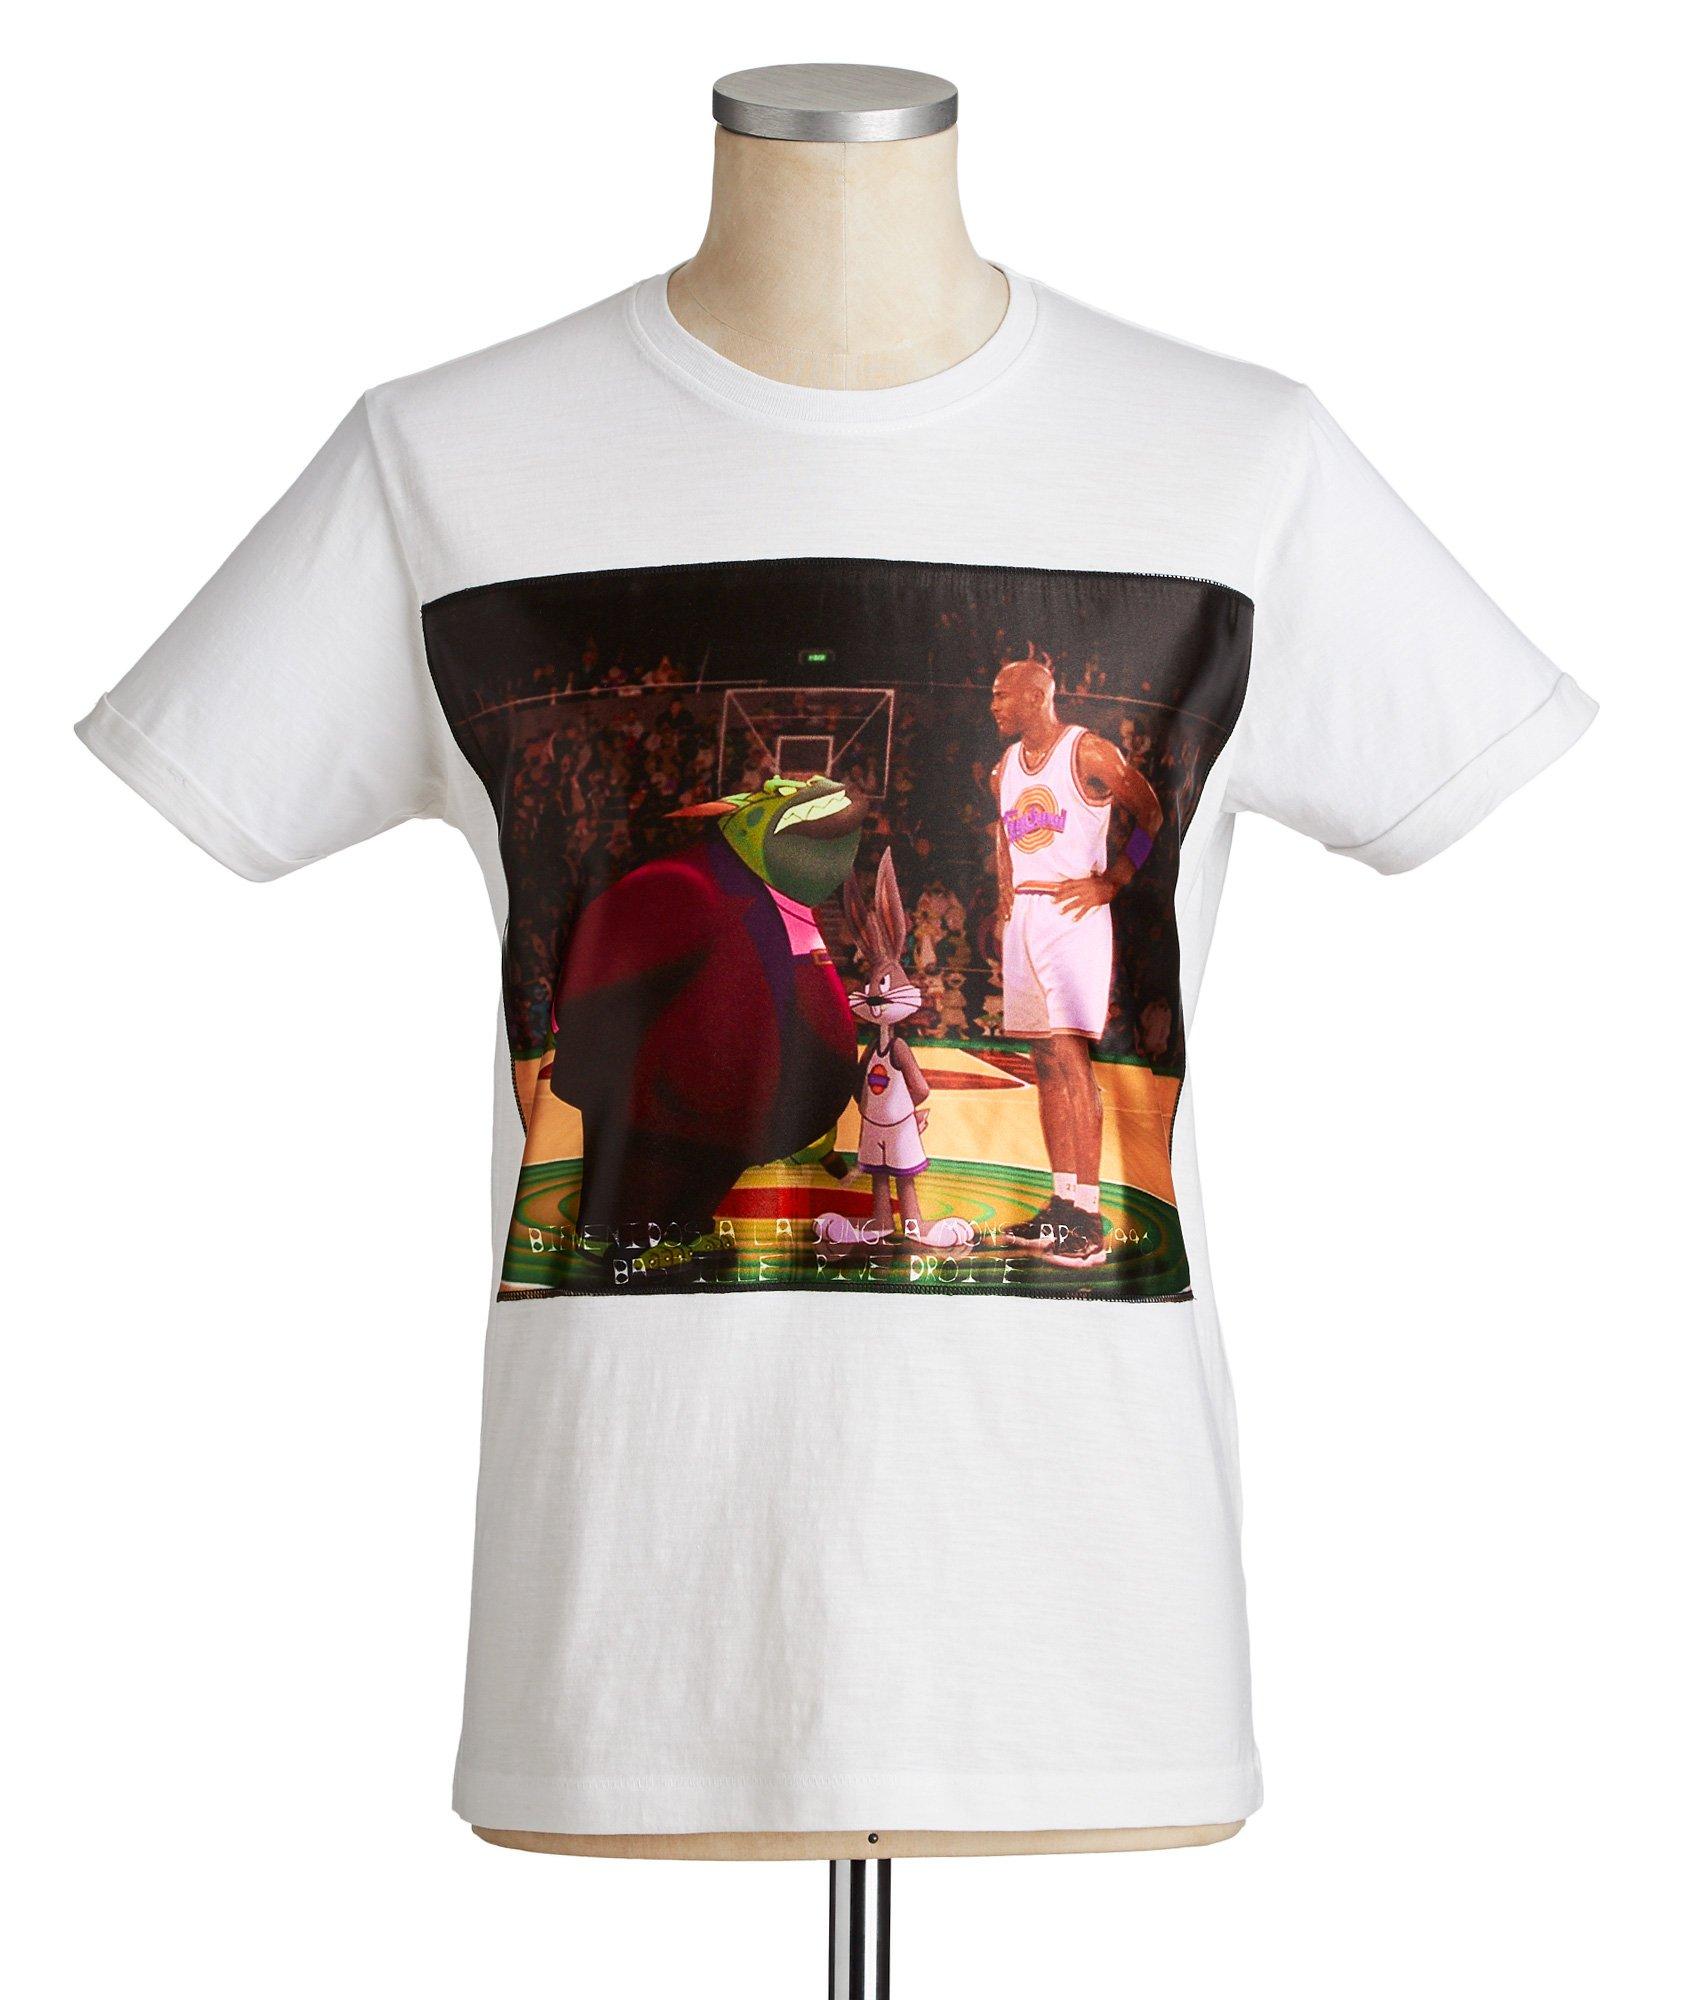 Space Jam Printed Cotton T-Shirt image 0